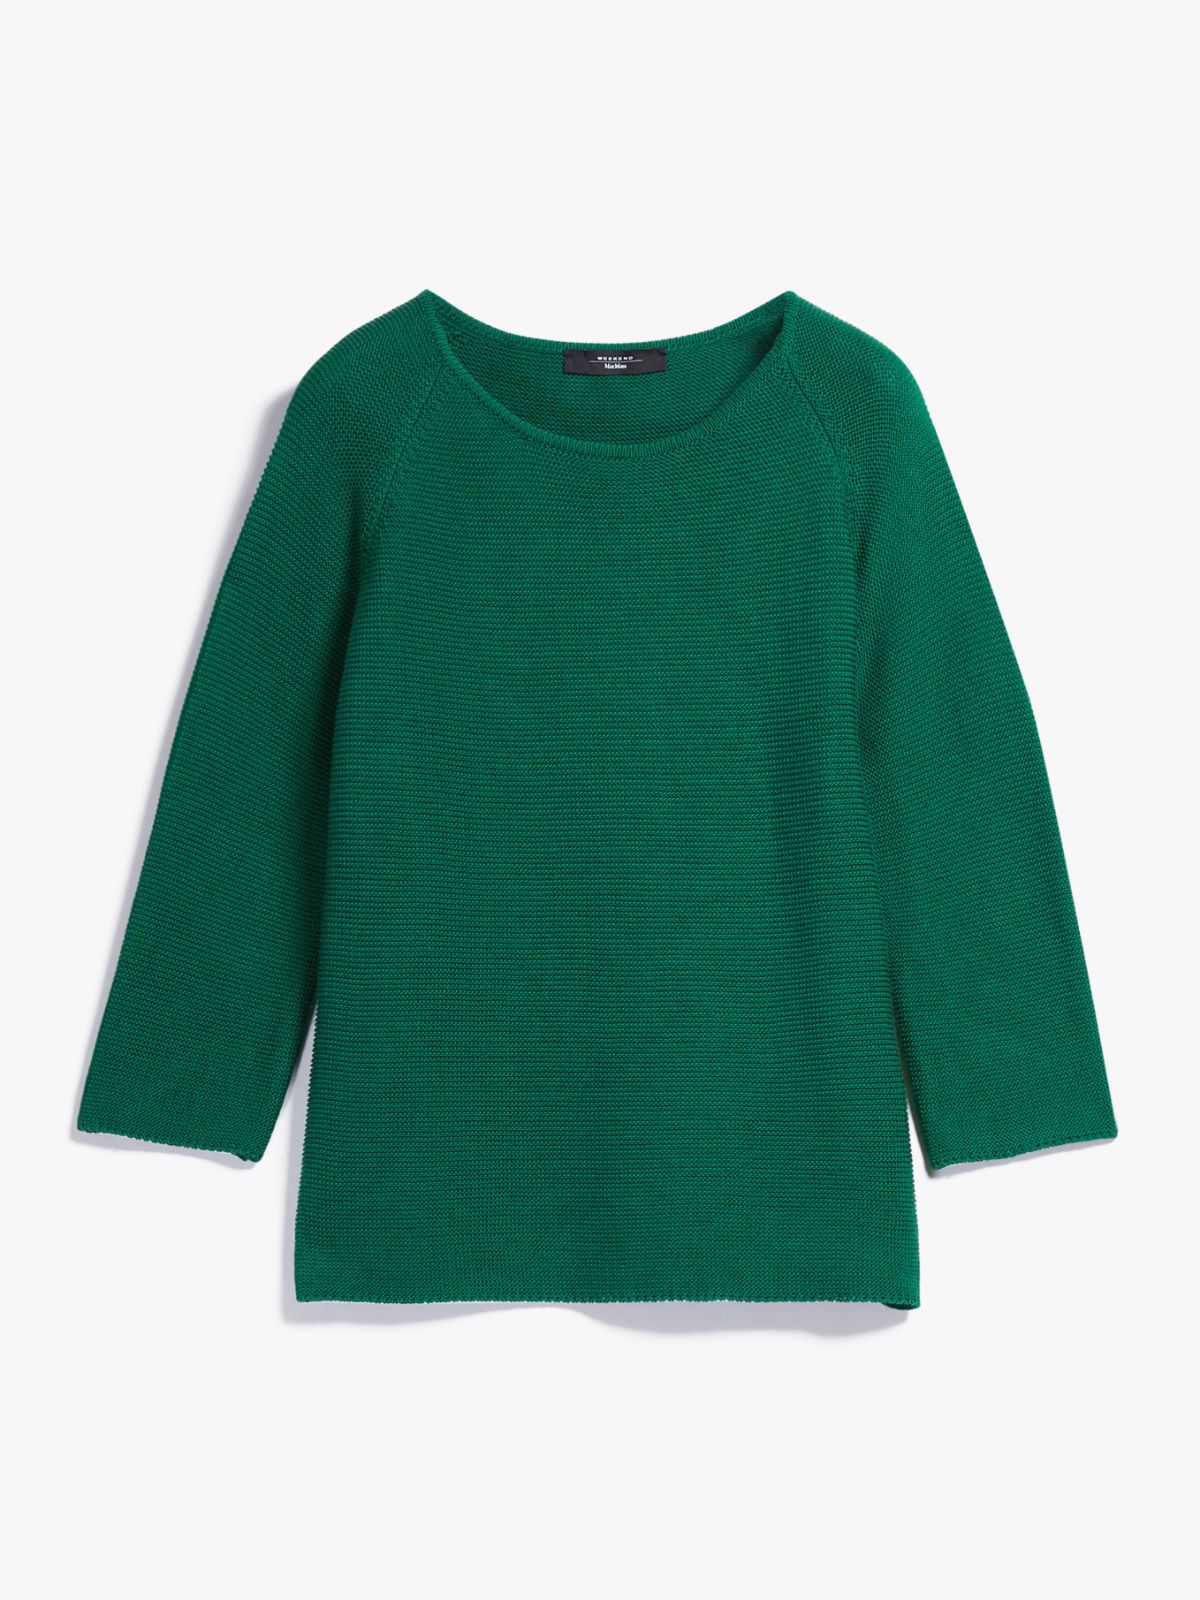 Cotton yarn sweater    - GREEN - Weekend Max Mara - 6